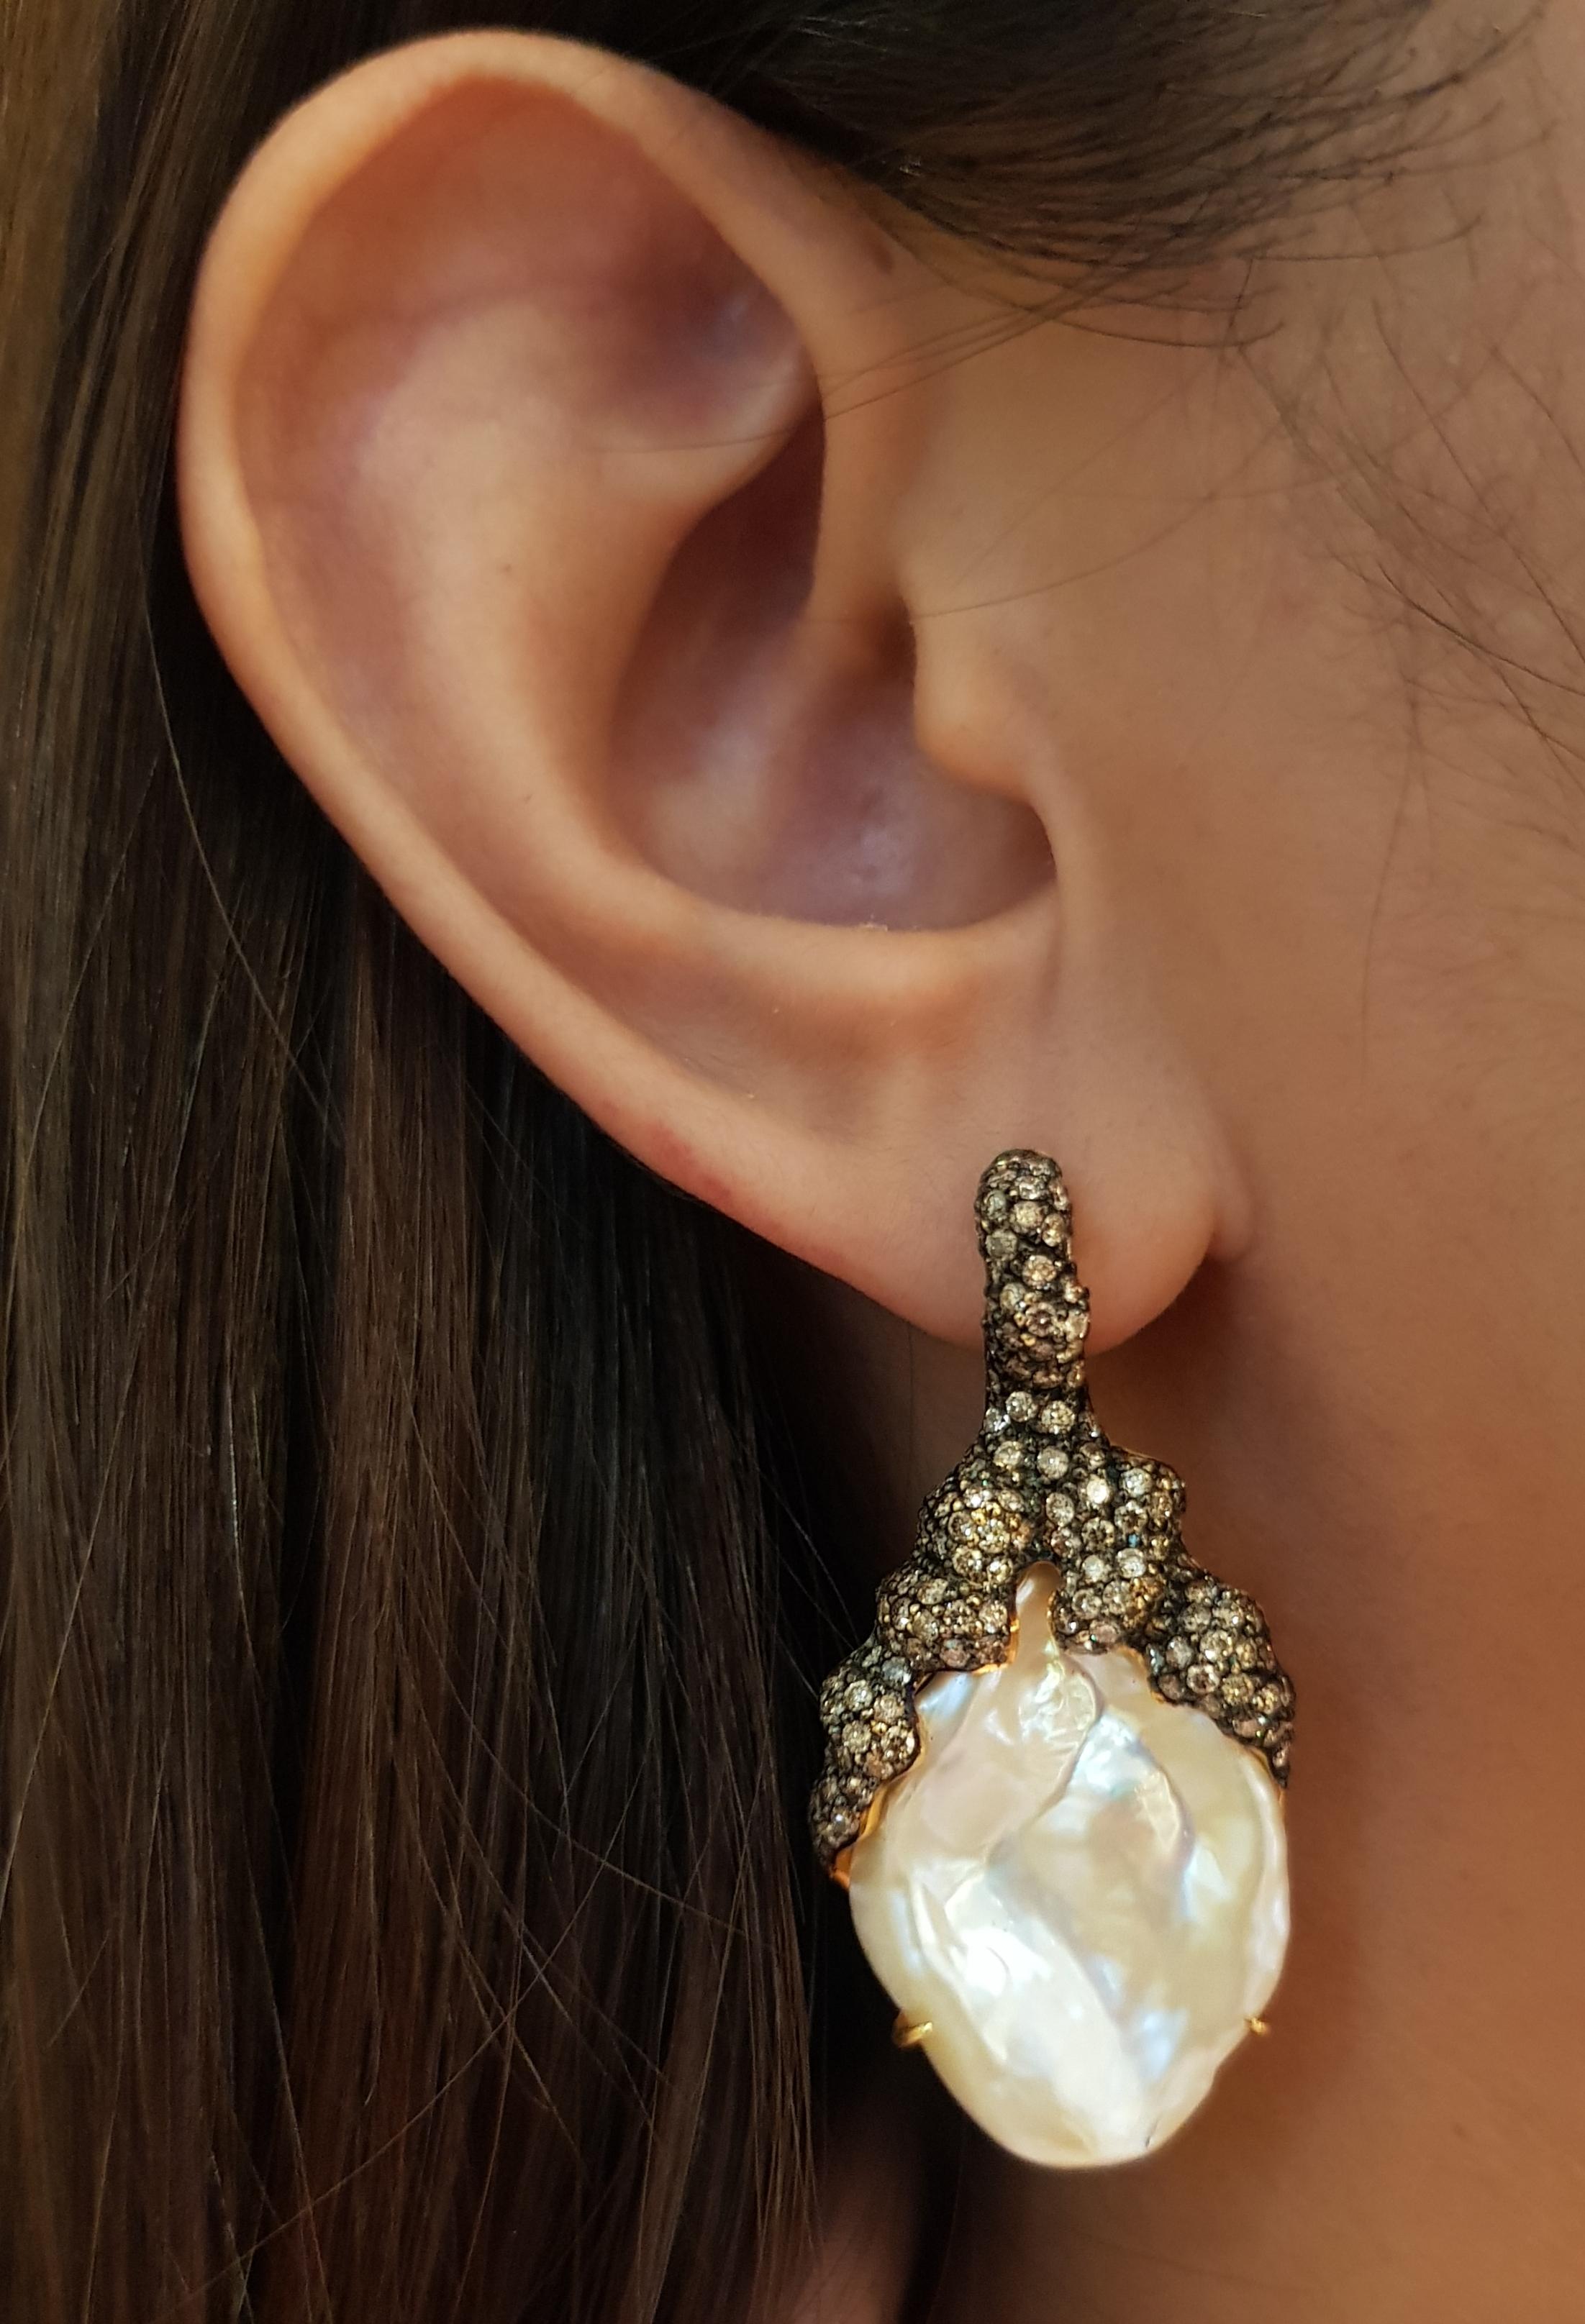 Pearl with Brown Diamond 3.02 carats Earrings set in 18 Karat Gold Settings

Width:  2.1 cm 
Length:  4.3  cm
Total Weight: 22.97 grams

